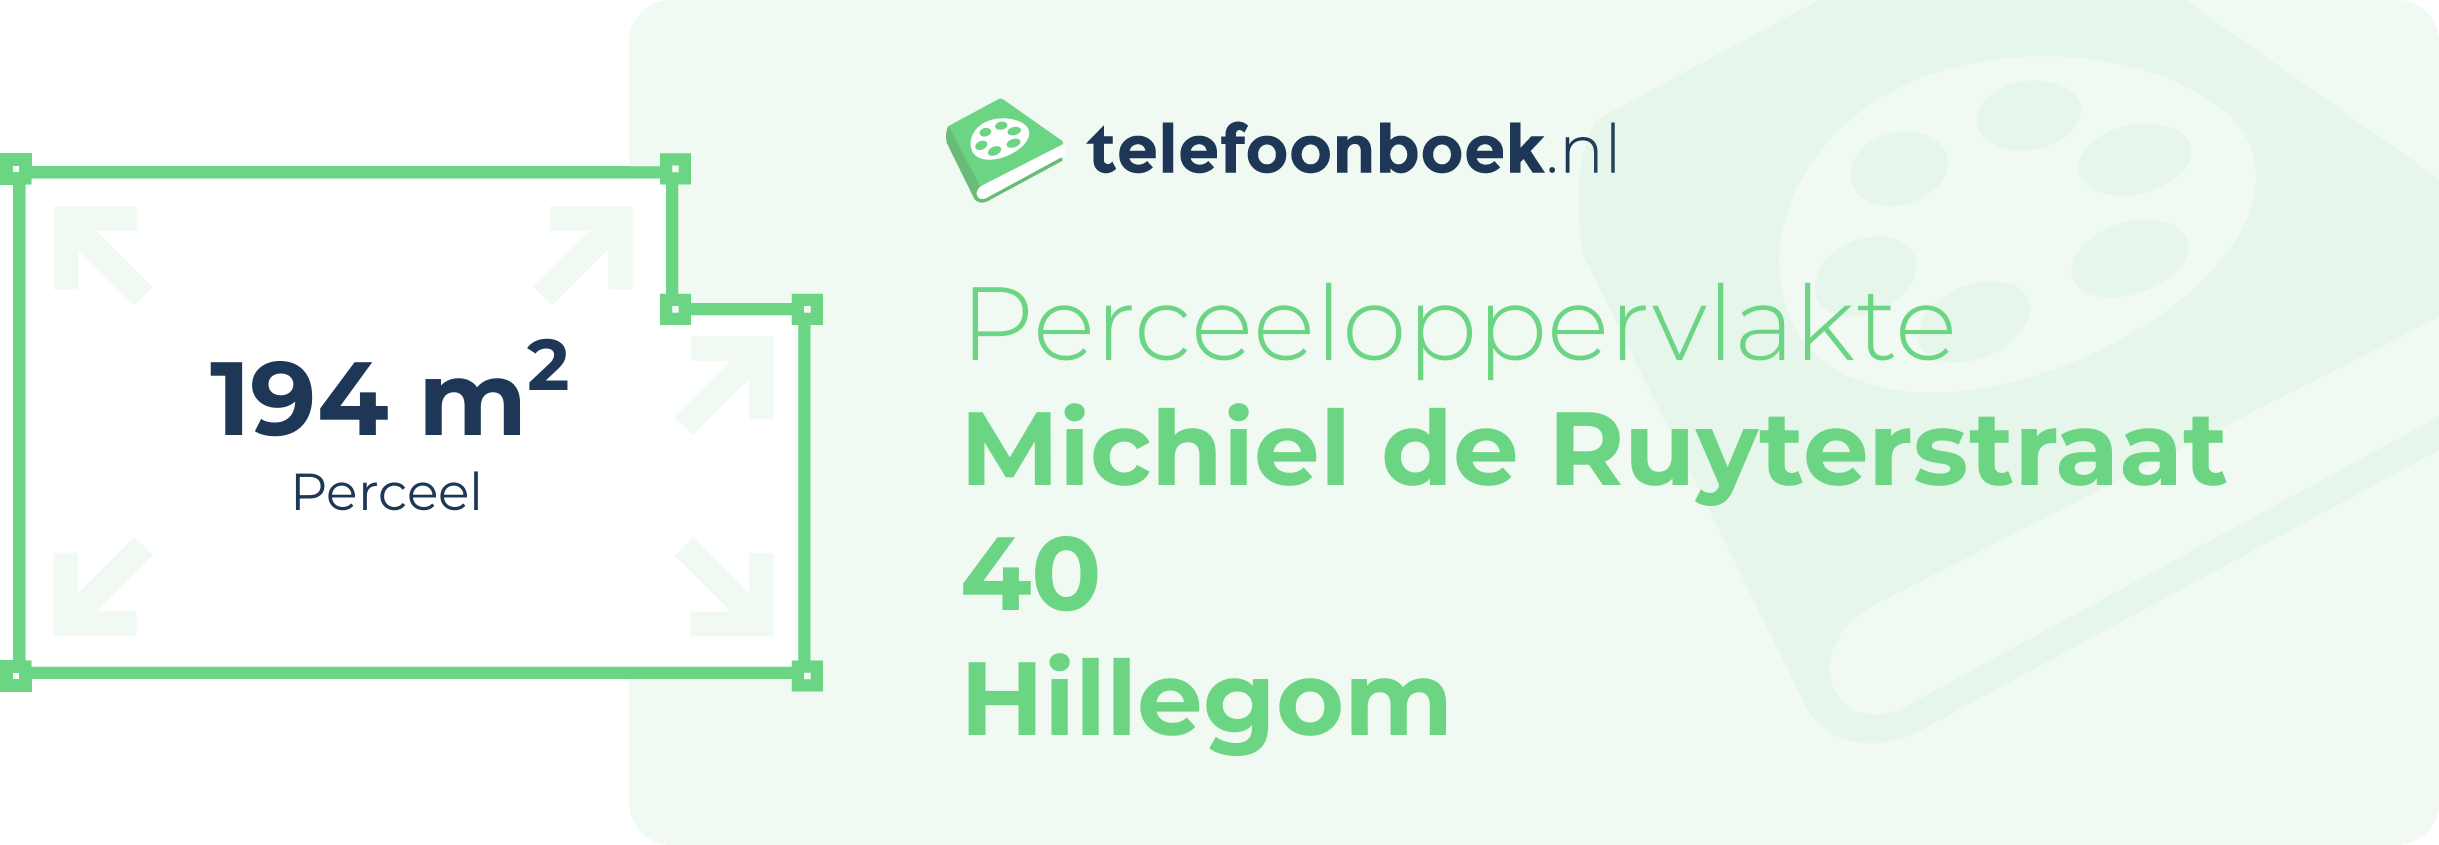 Perceeloppervlakte Michiel De Ruyterstraat 40 Hillegom